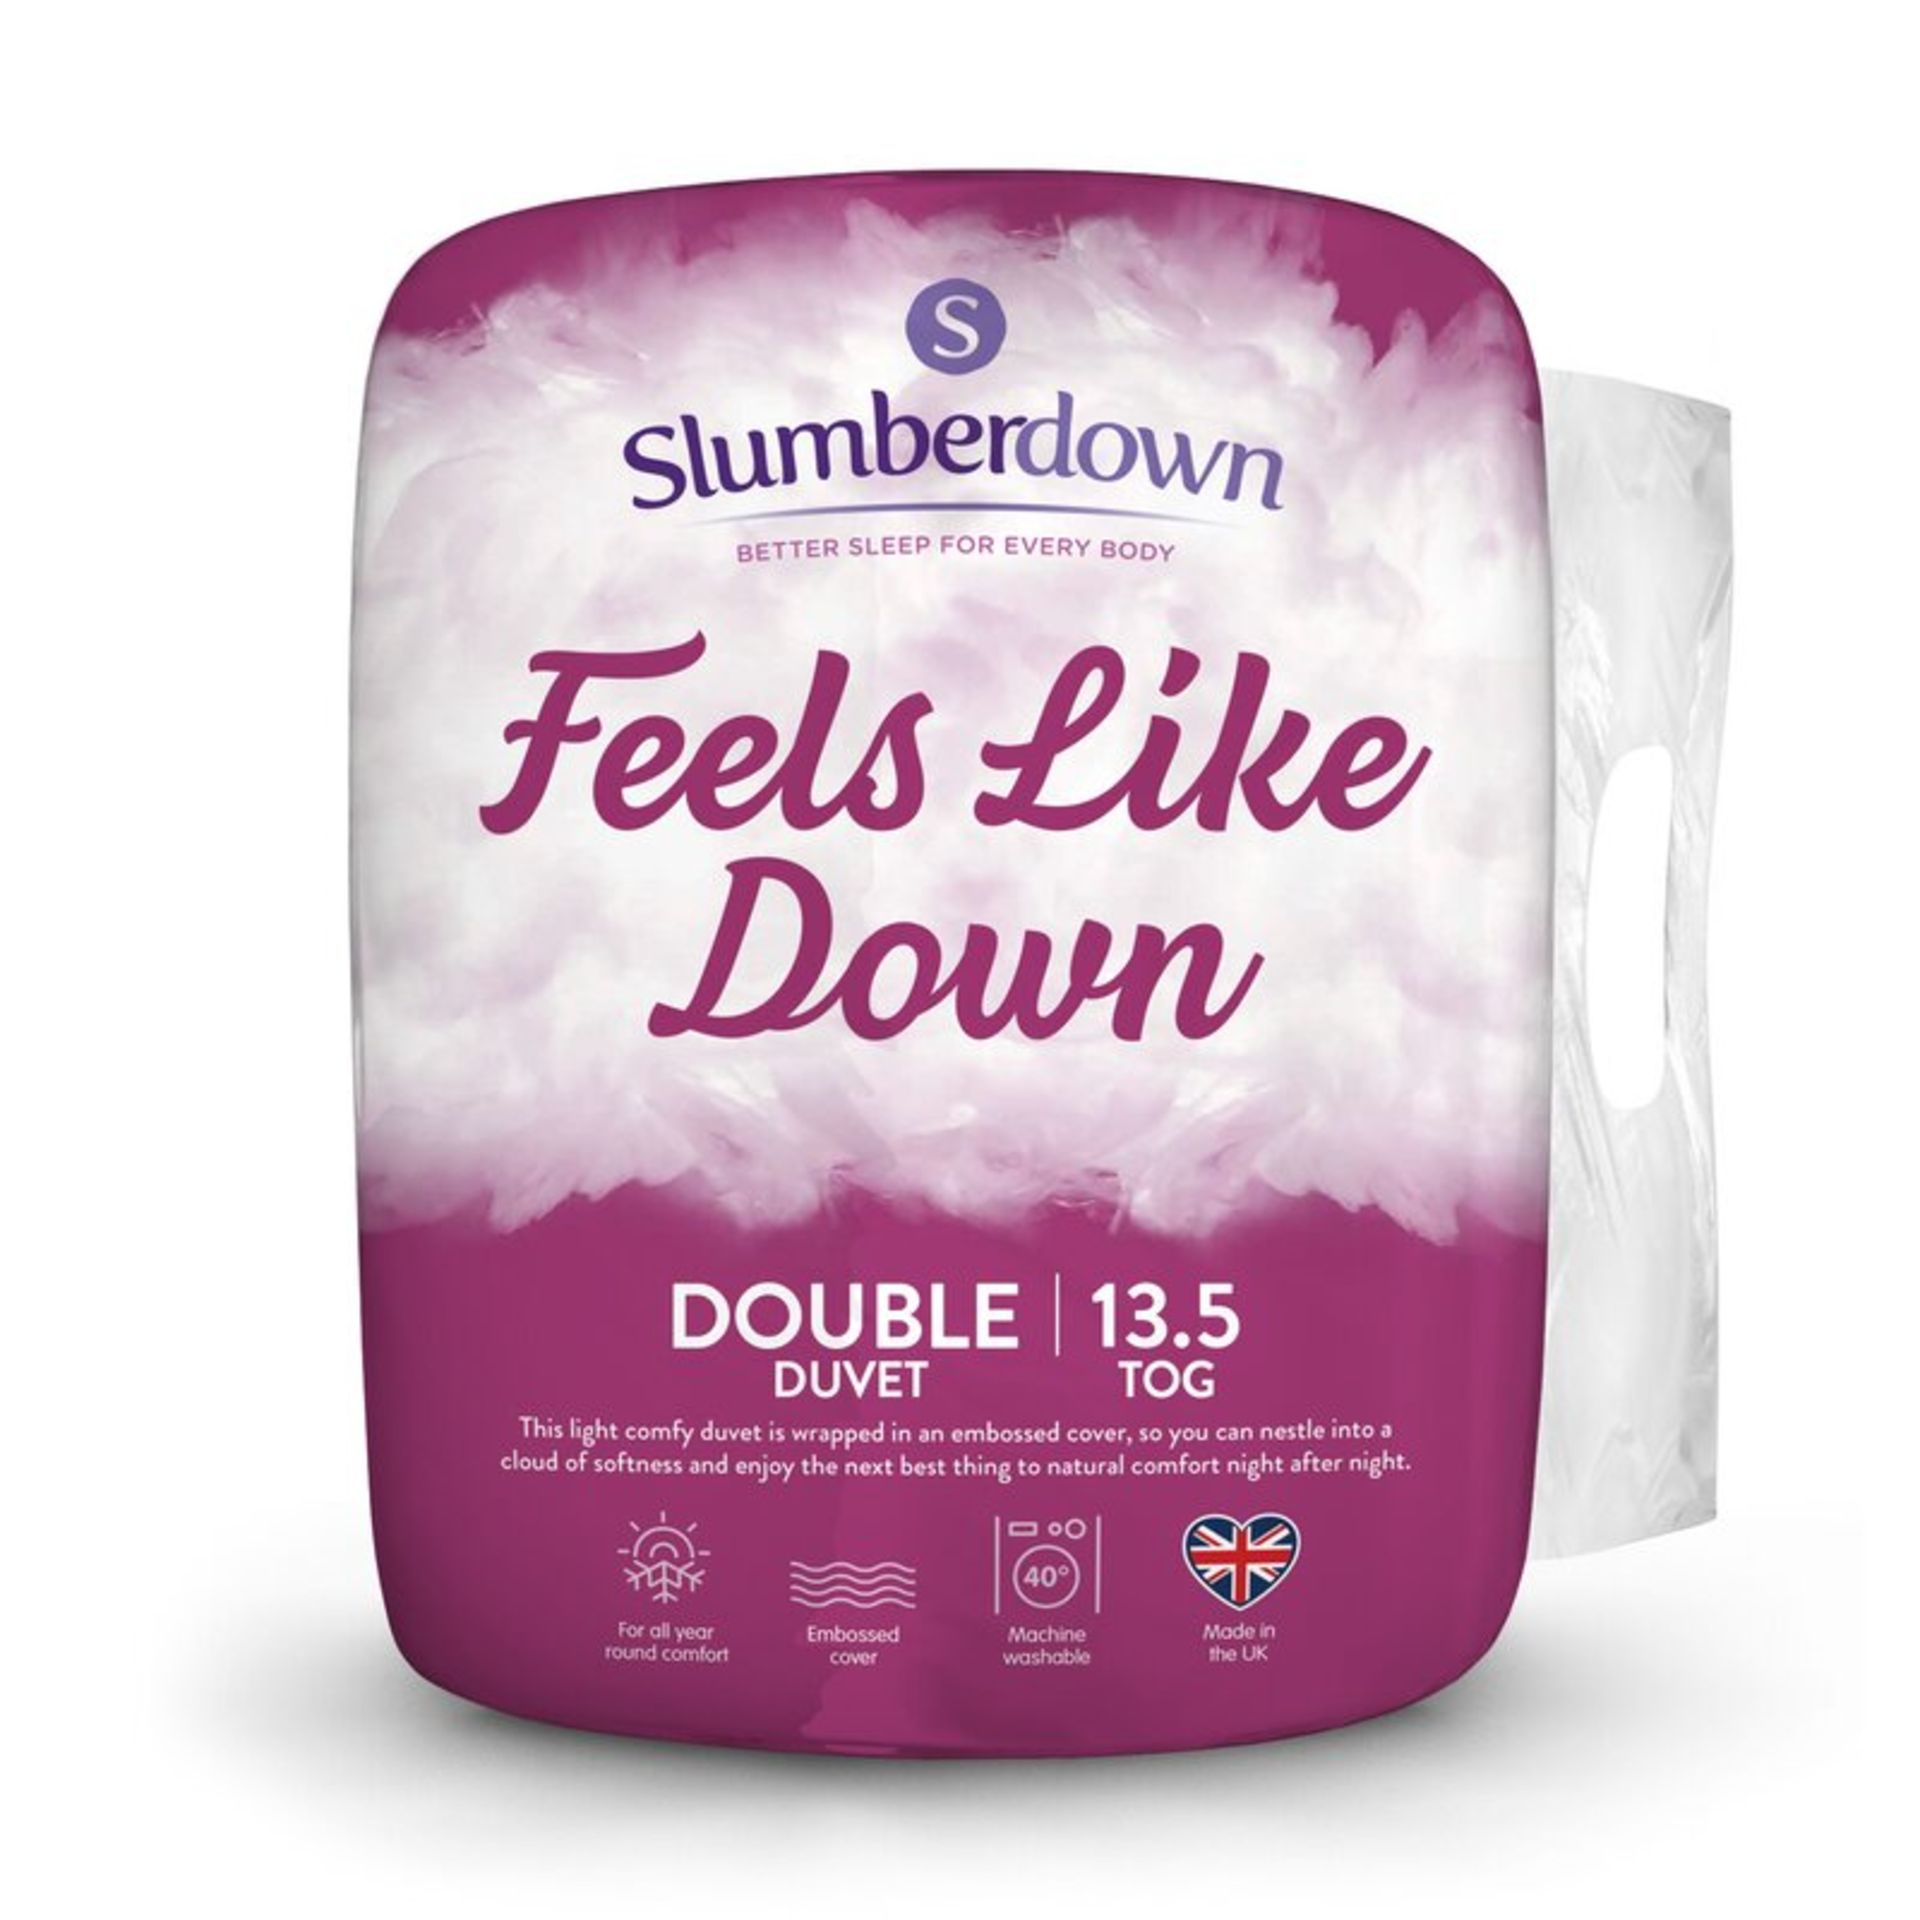 4ft 6 Double Slumberdown Feels Like Down Duvet - 13.5 Tog - RRP £40.99. - Image 2 of 3